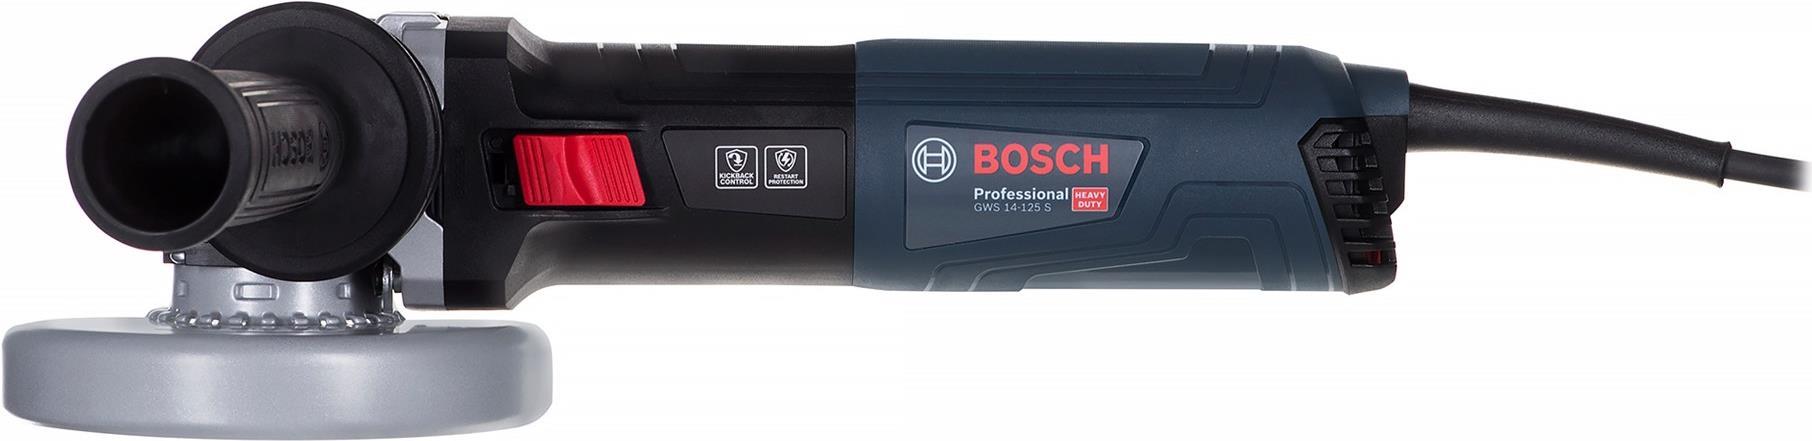 Bosch GWS Professional 14-125 S (06017D0100)